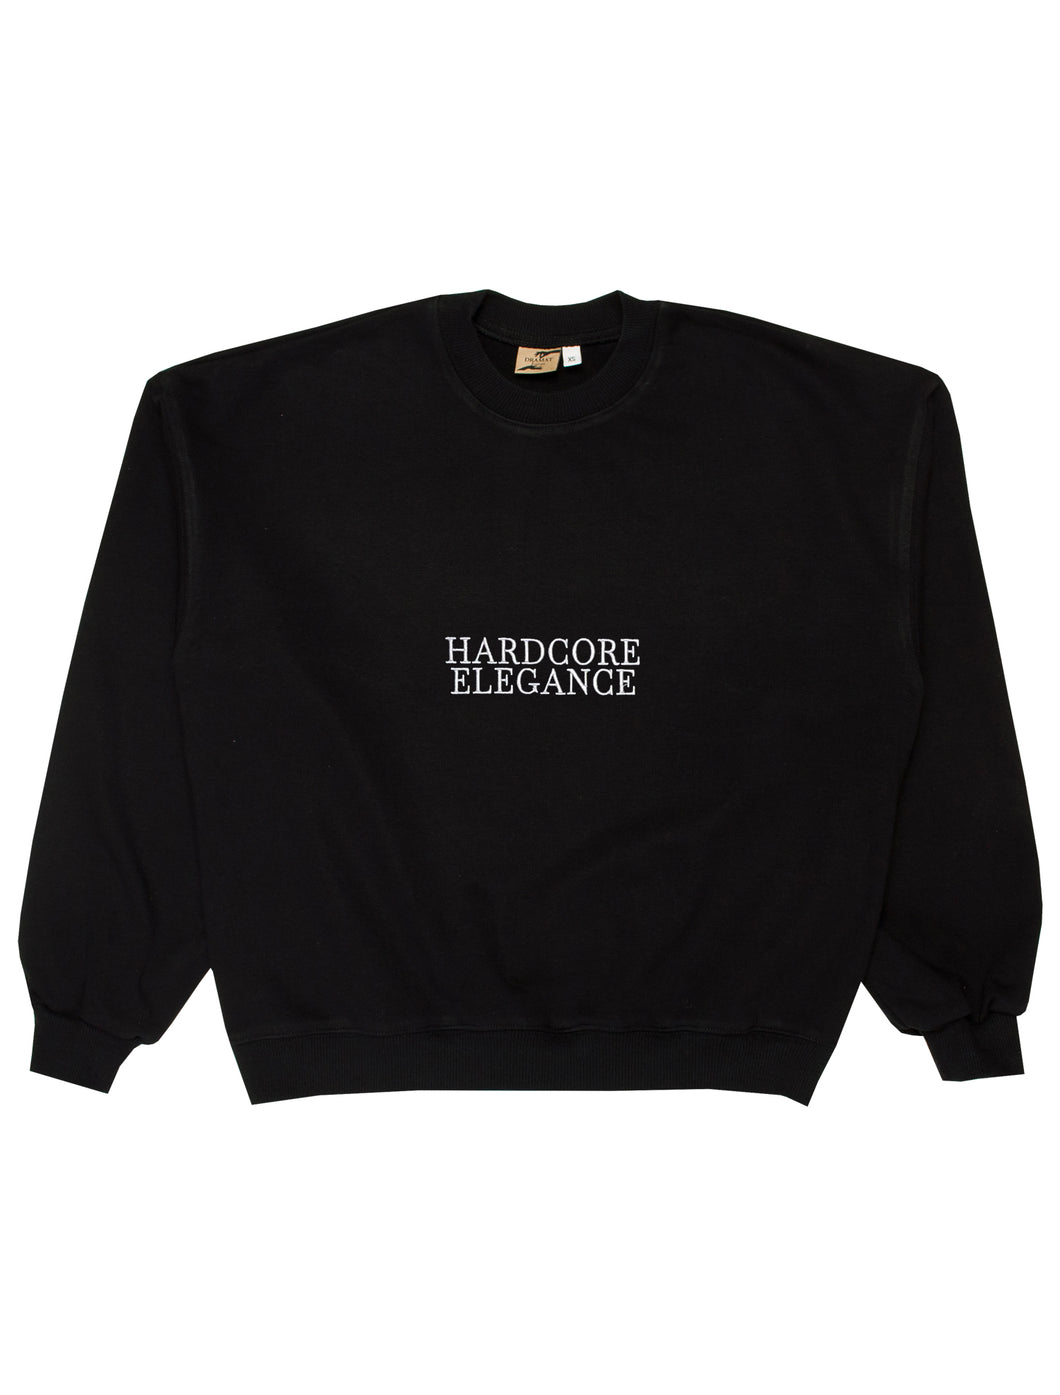 Hardcore Elegance sweatshirt